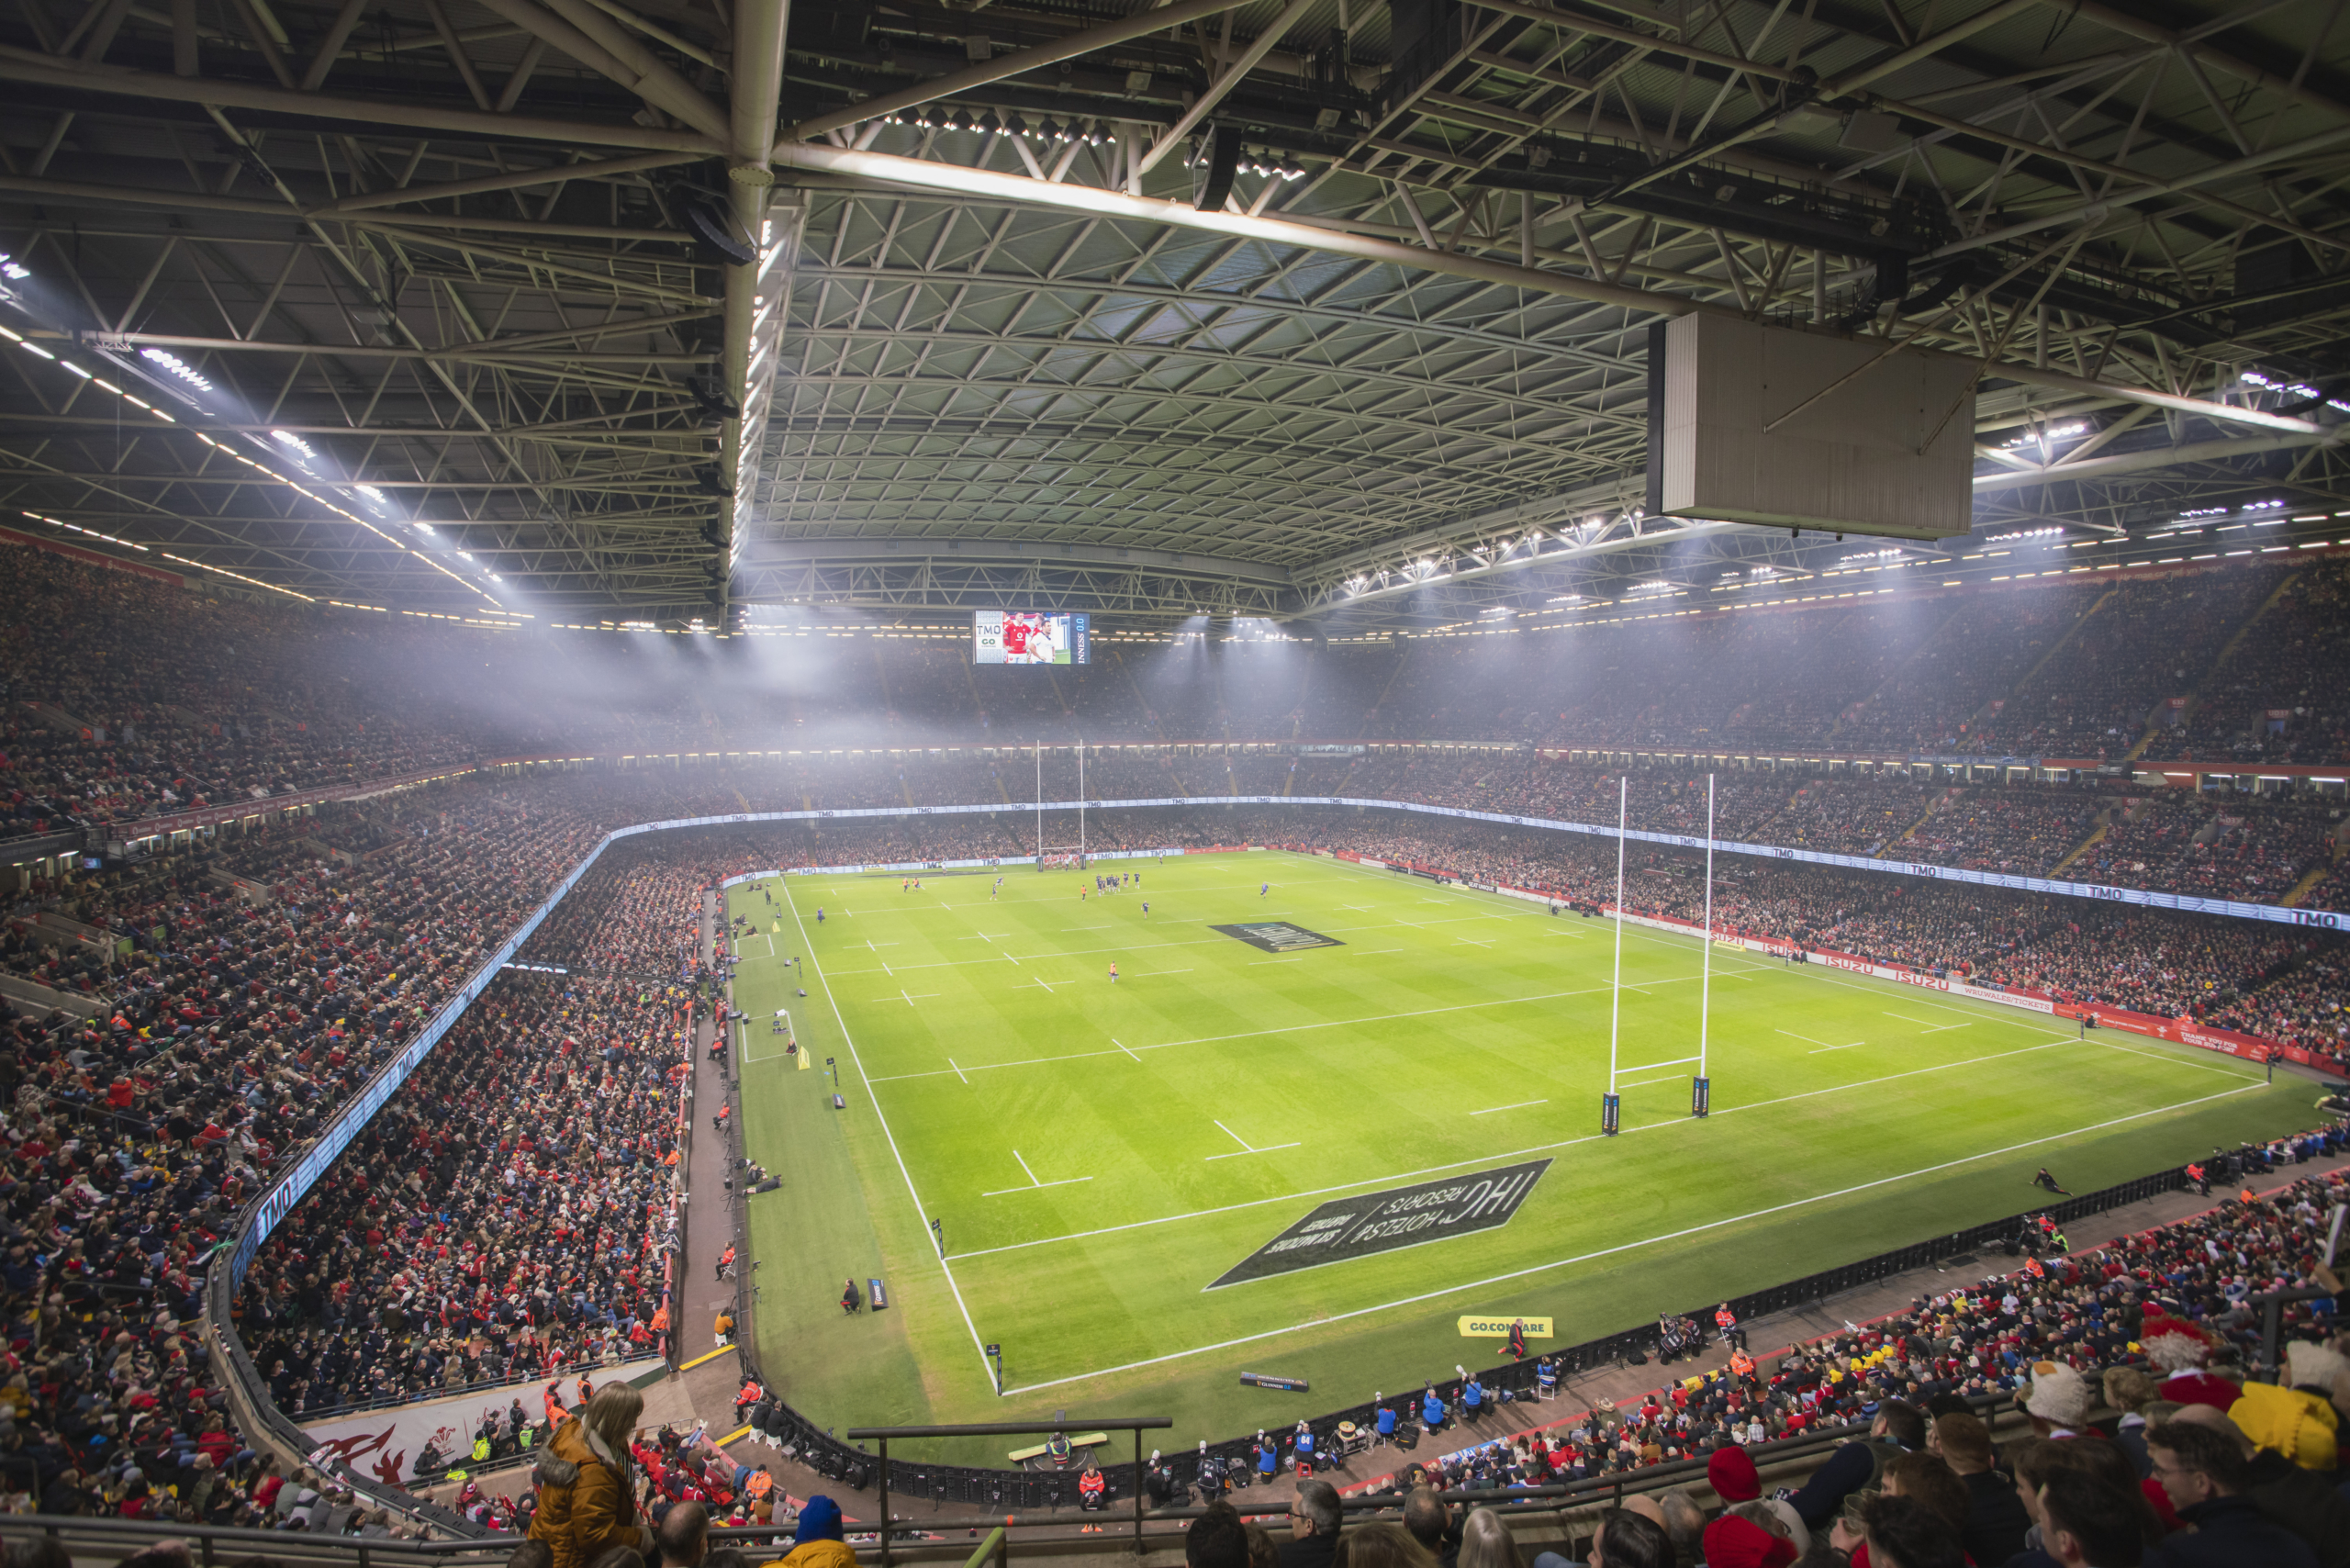 Principality Stadium in Cardiff is the latest national stadium to install NEXO sound